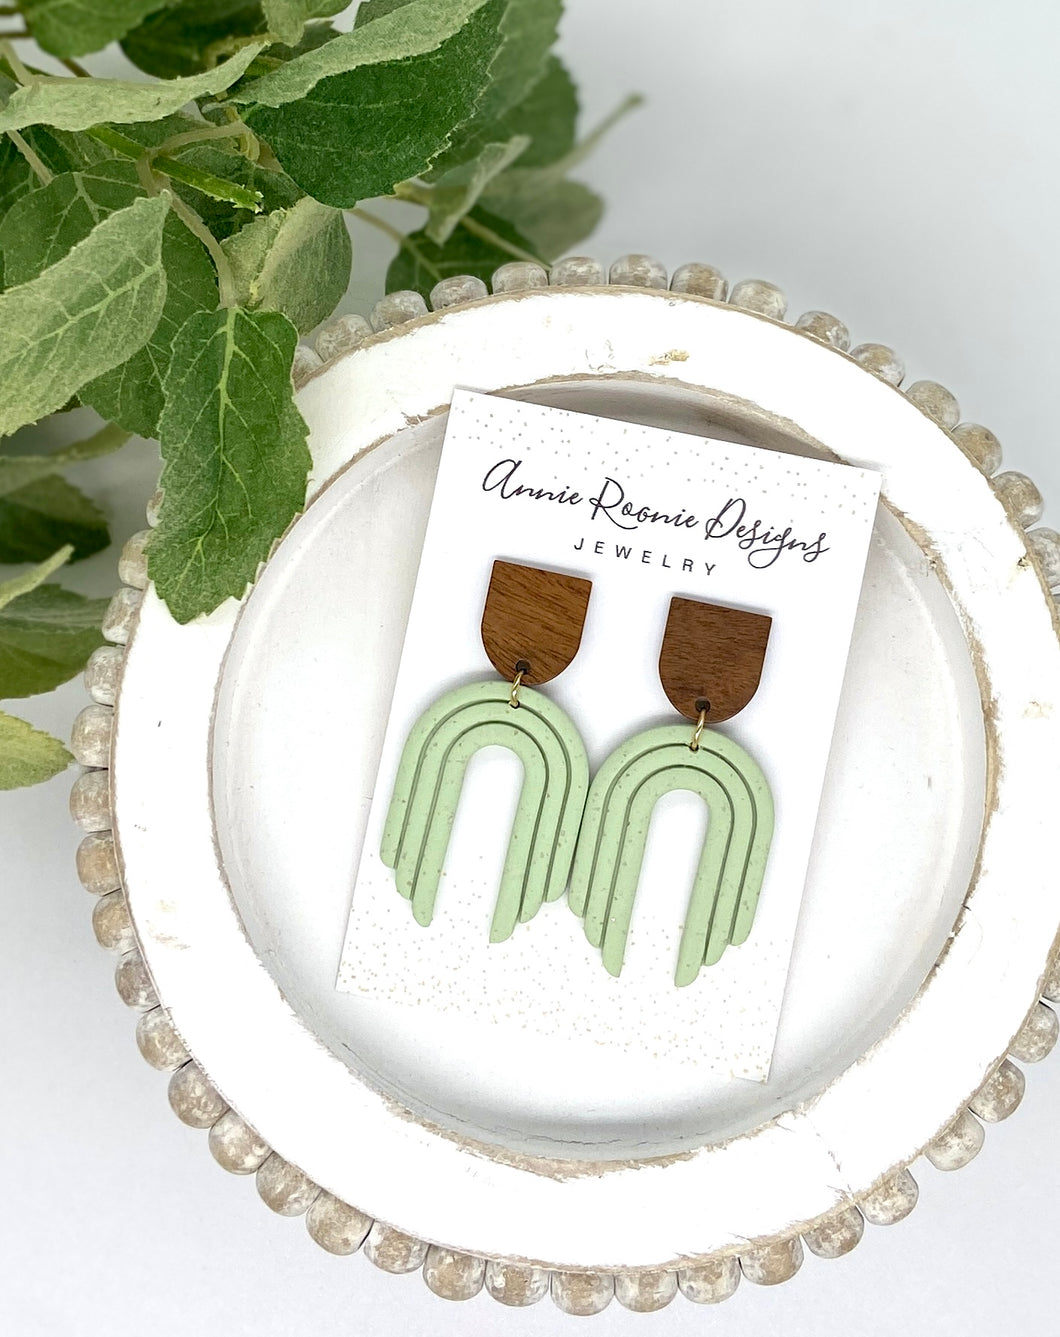 Mint Green Rainbow Clay earrings